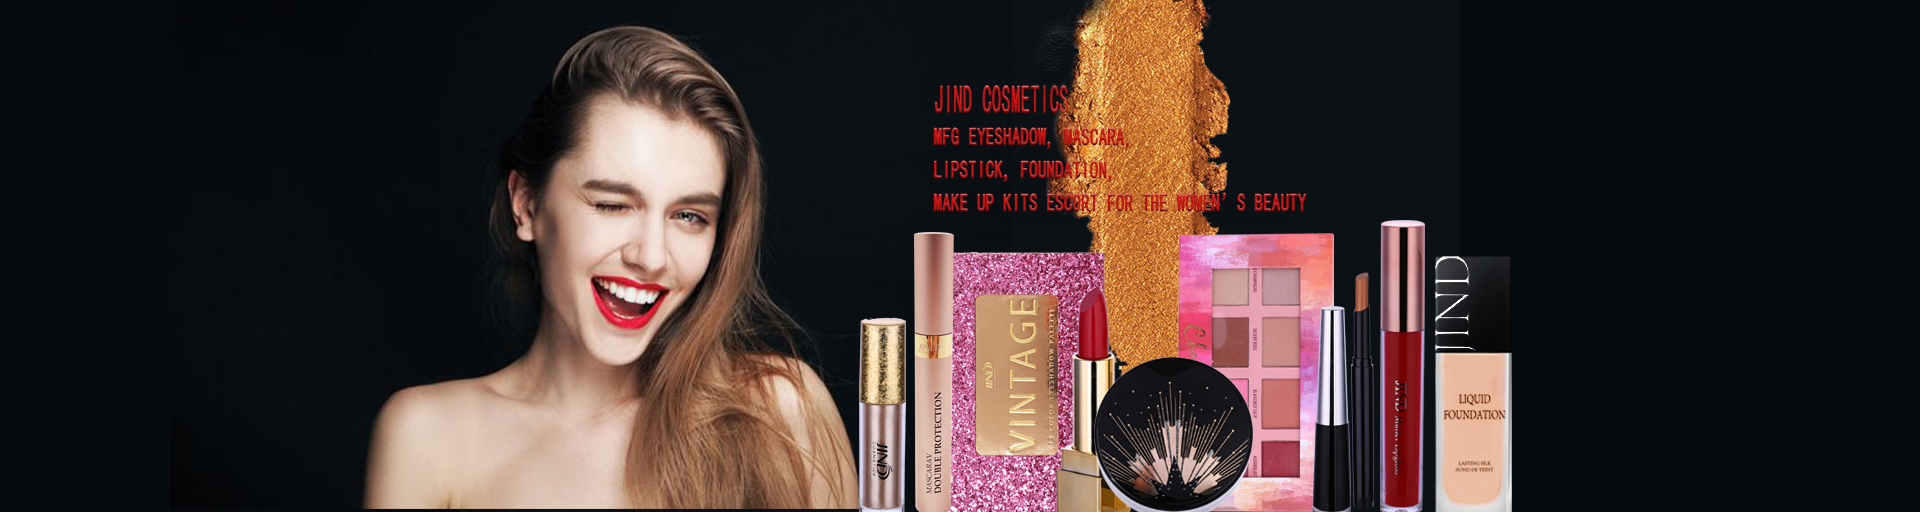 JIND Cosmetics MFG Eyeshadow, Mascara, Rouge à lèvres